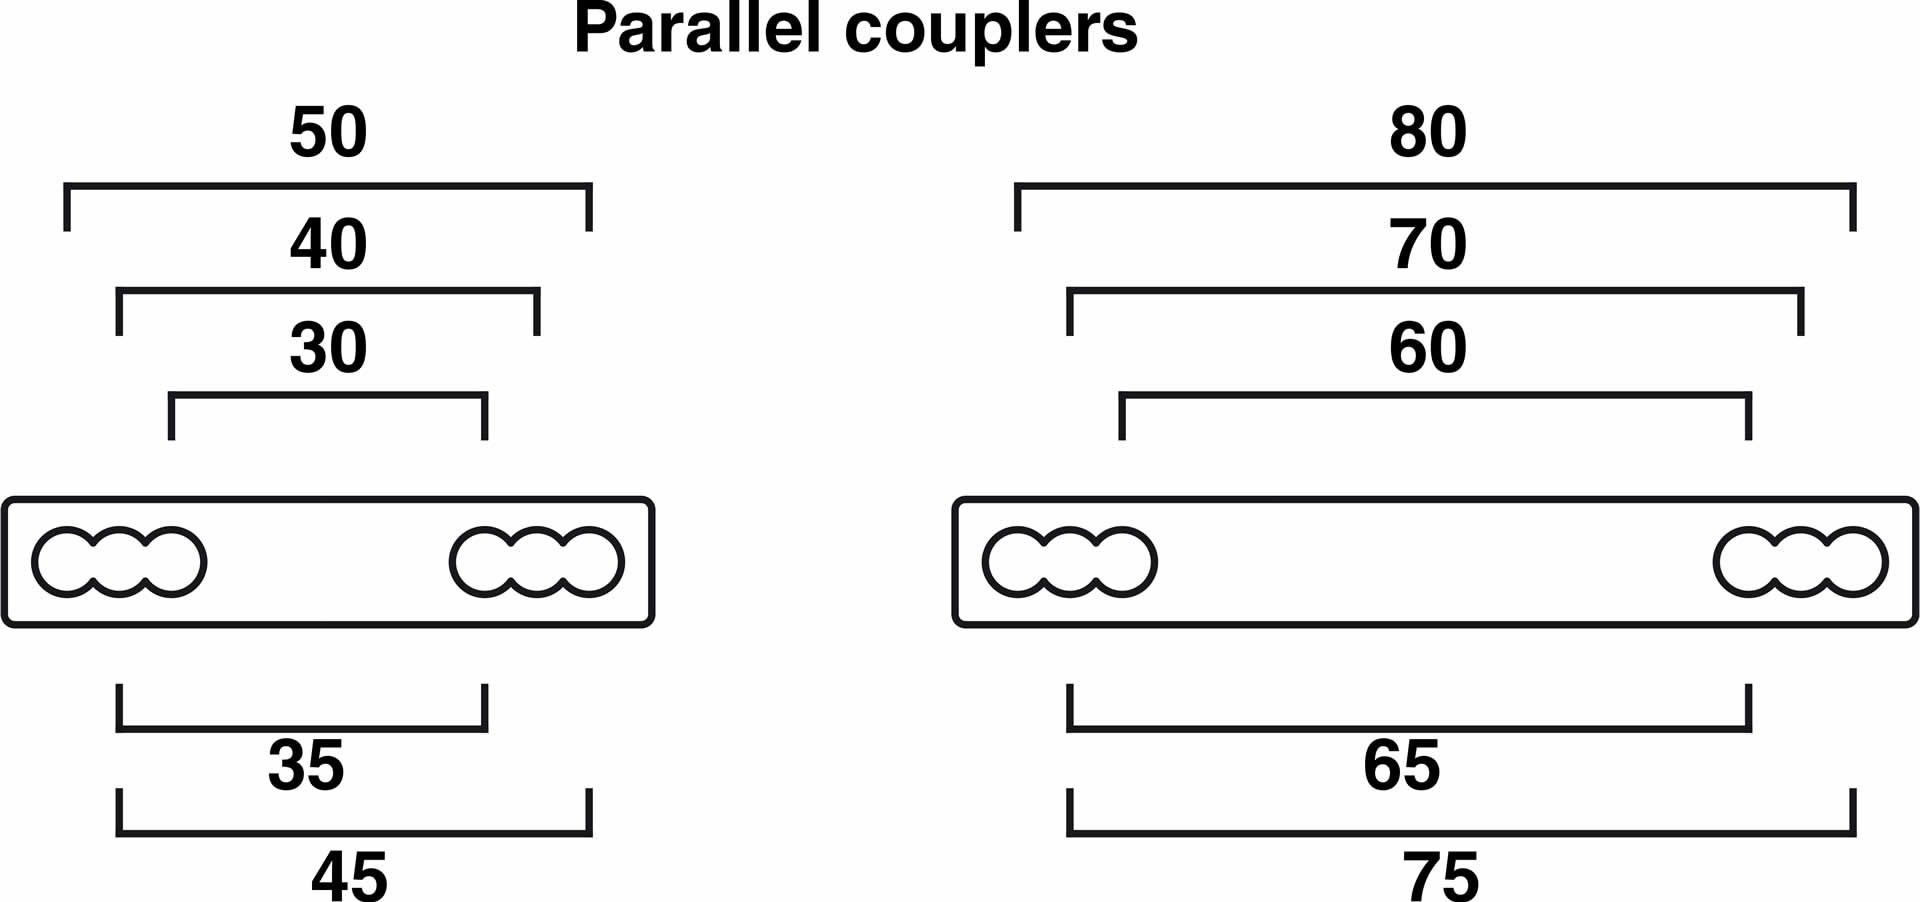 9-martin_sceptron_parallel-couplers_cotes.jpg